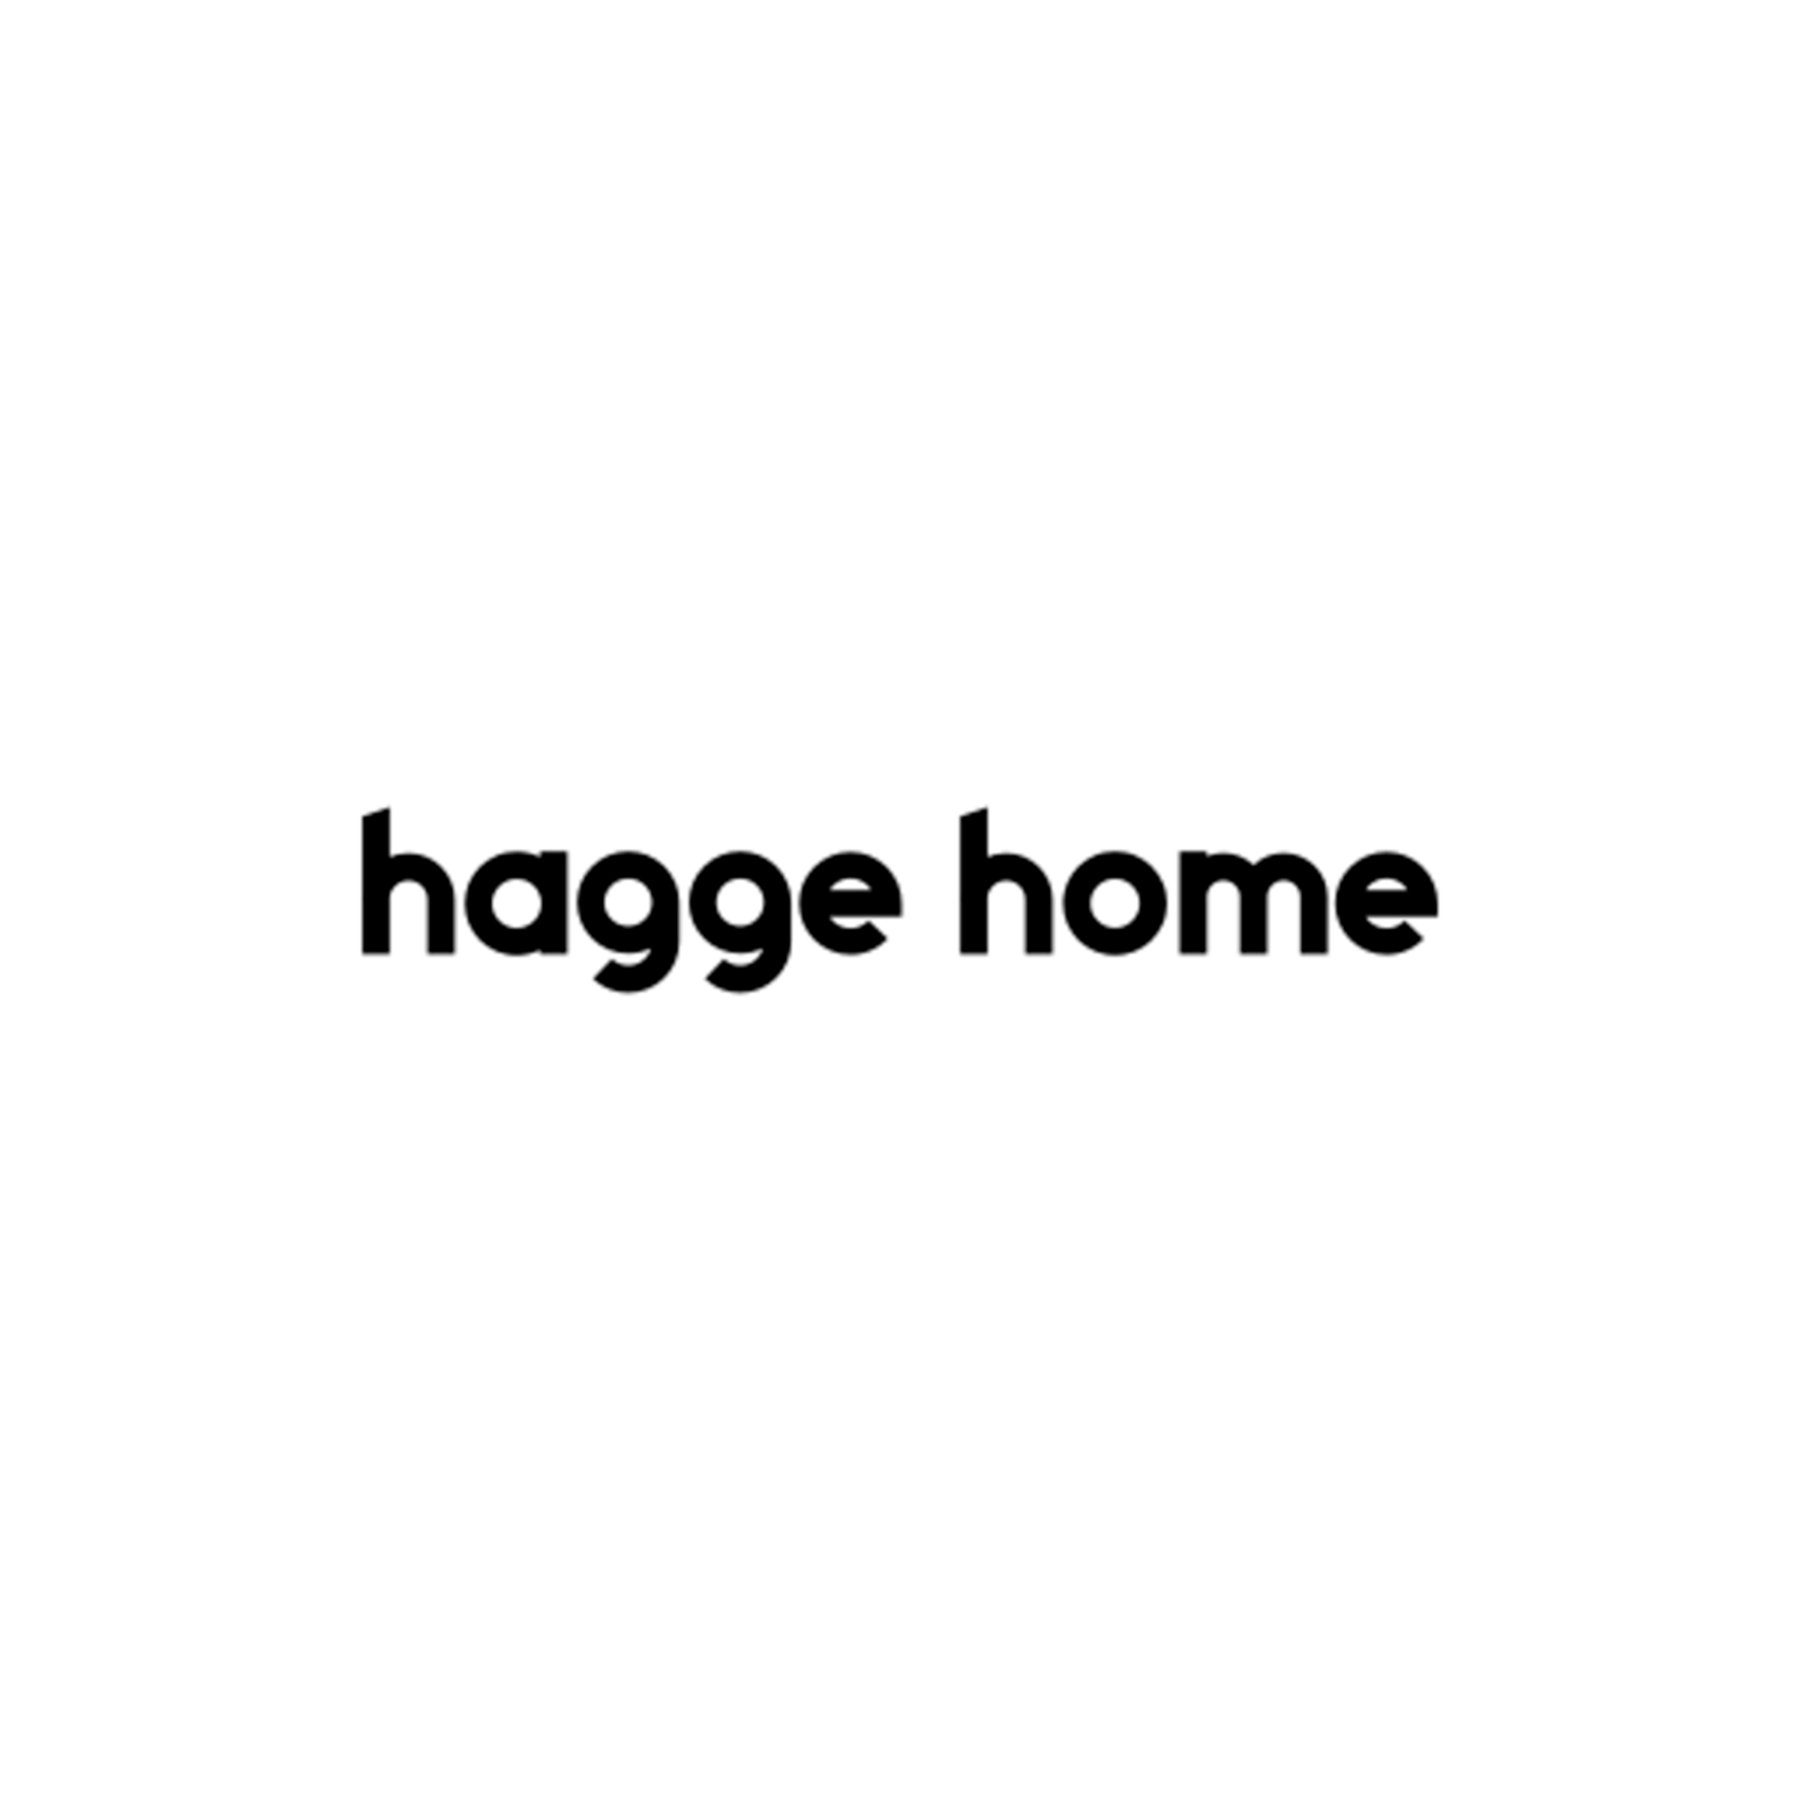 hagge home